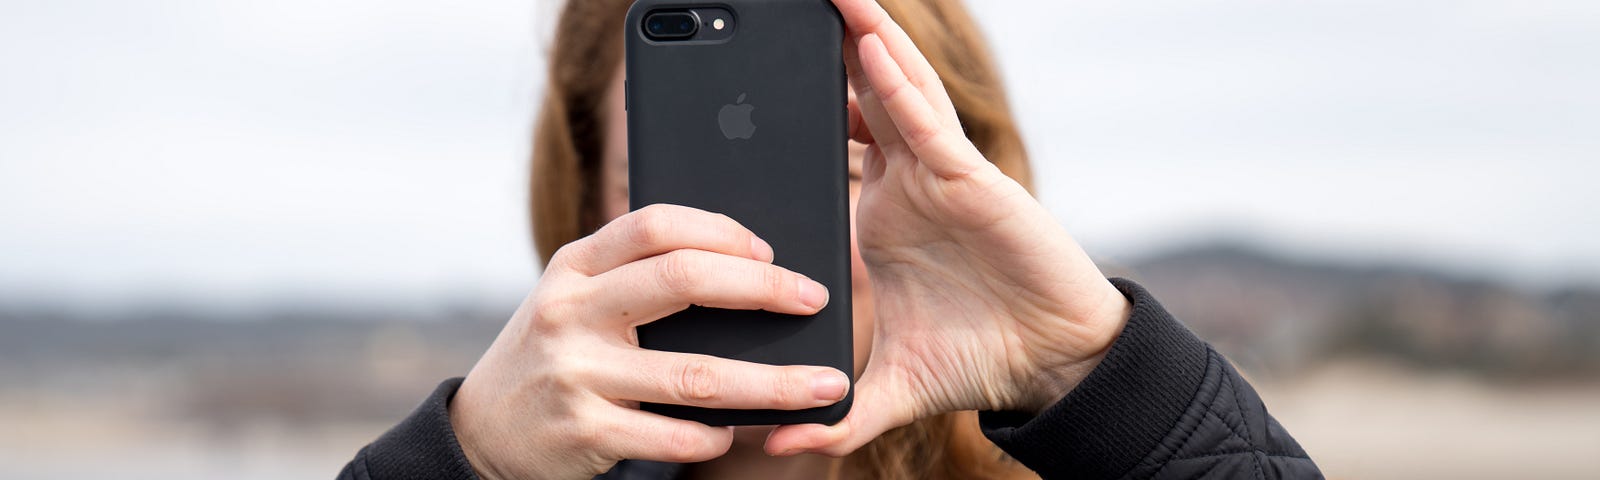 Woman taking photo using black iPhone 8 Plus